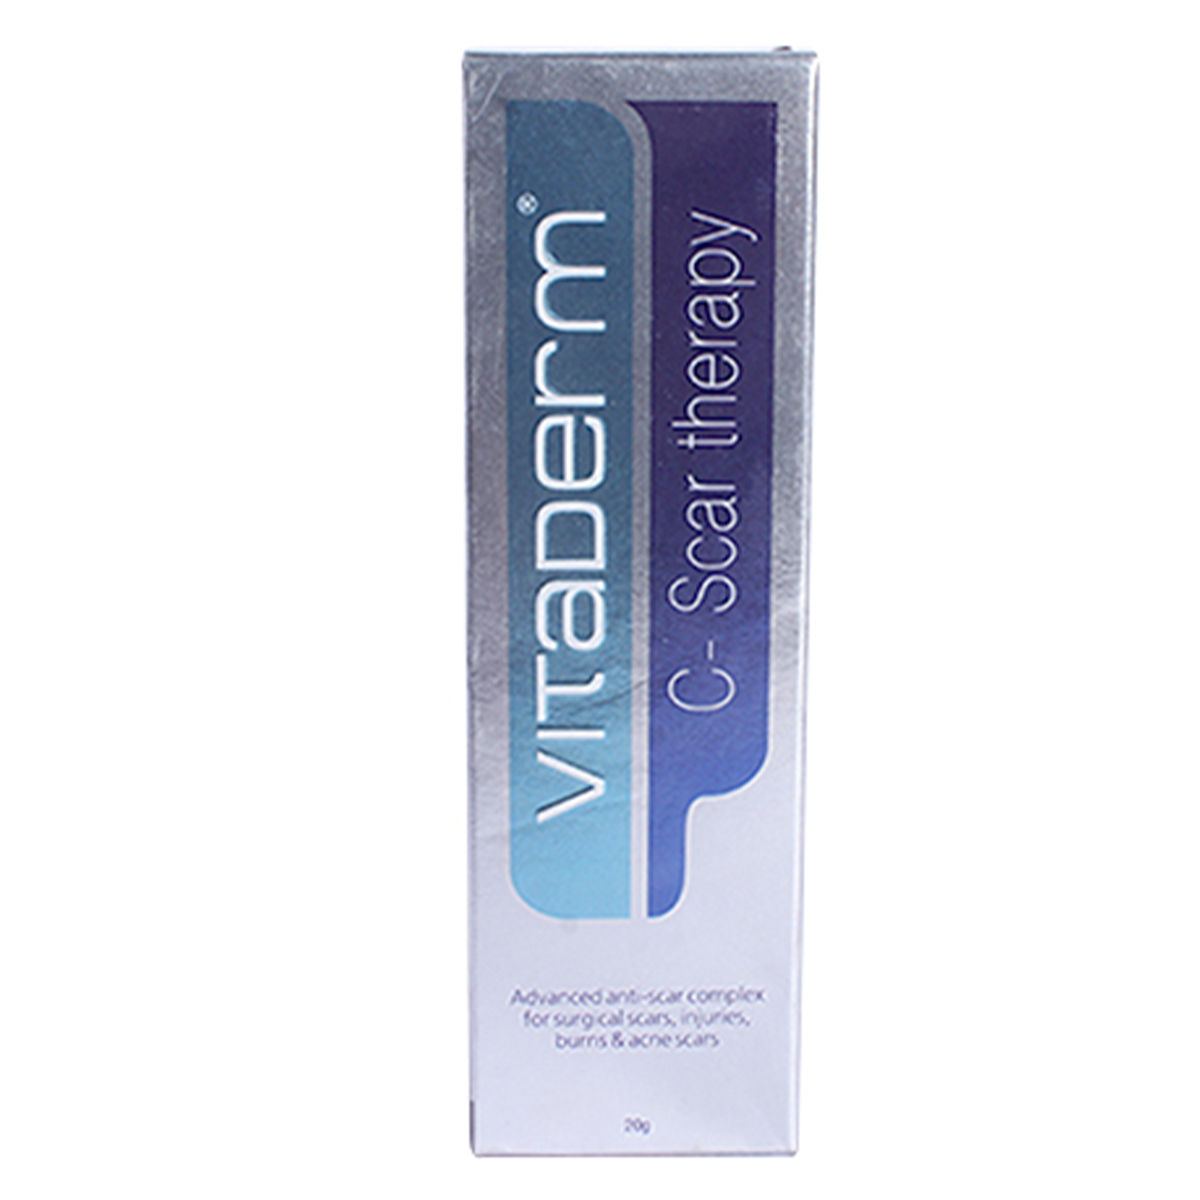 Vitaderm C-Scar Therapy Cream 20 gm, Pack of 1 Cream